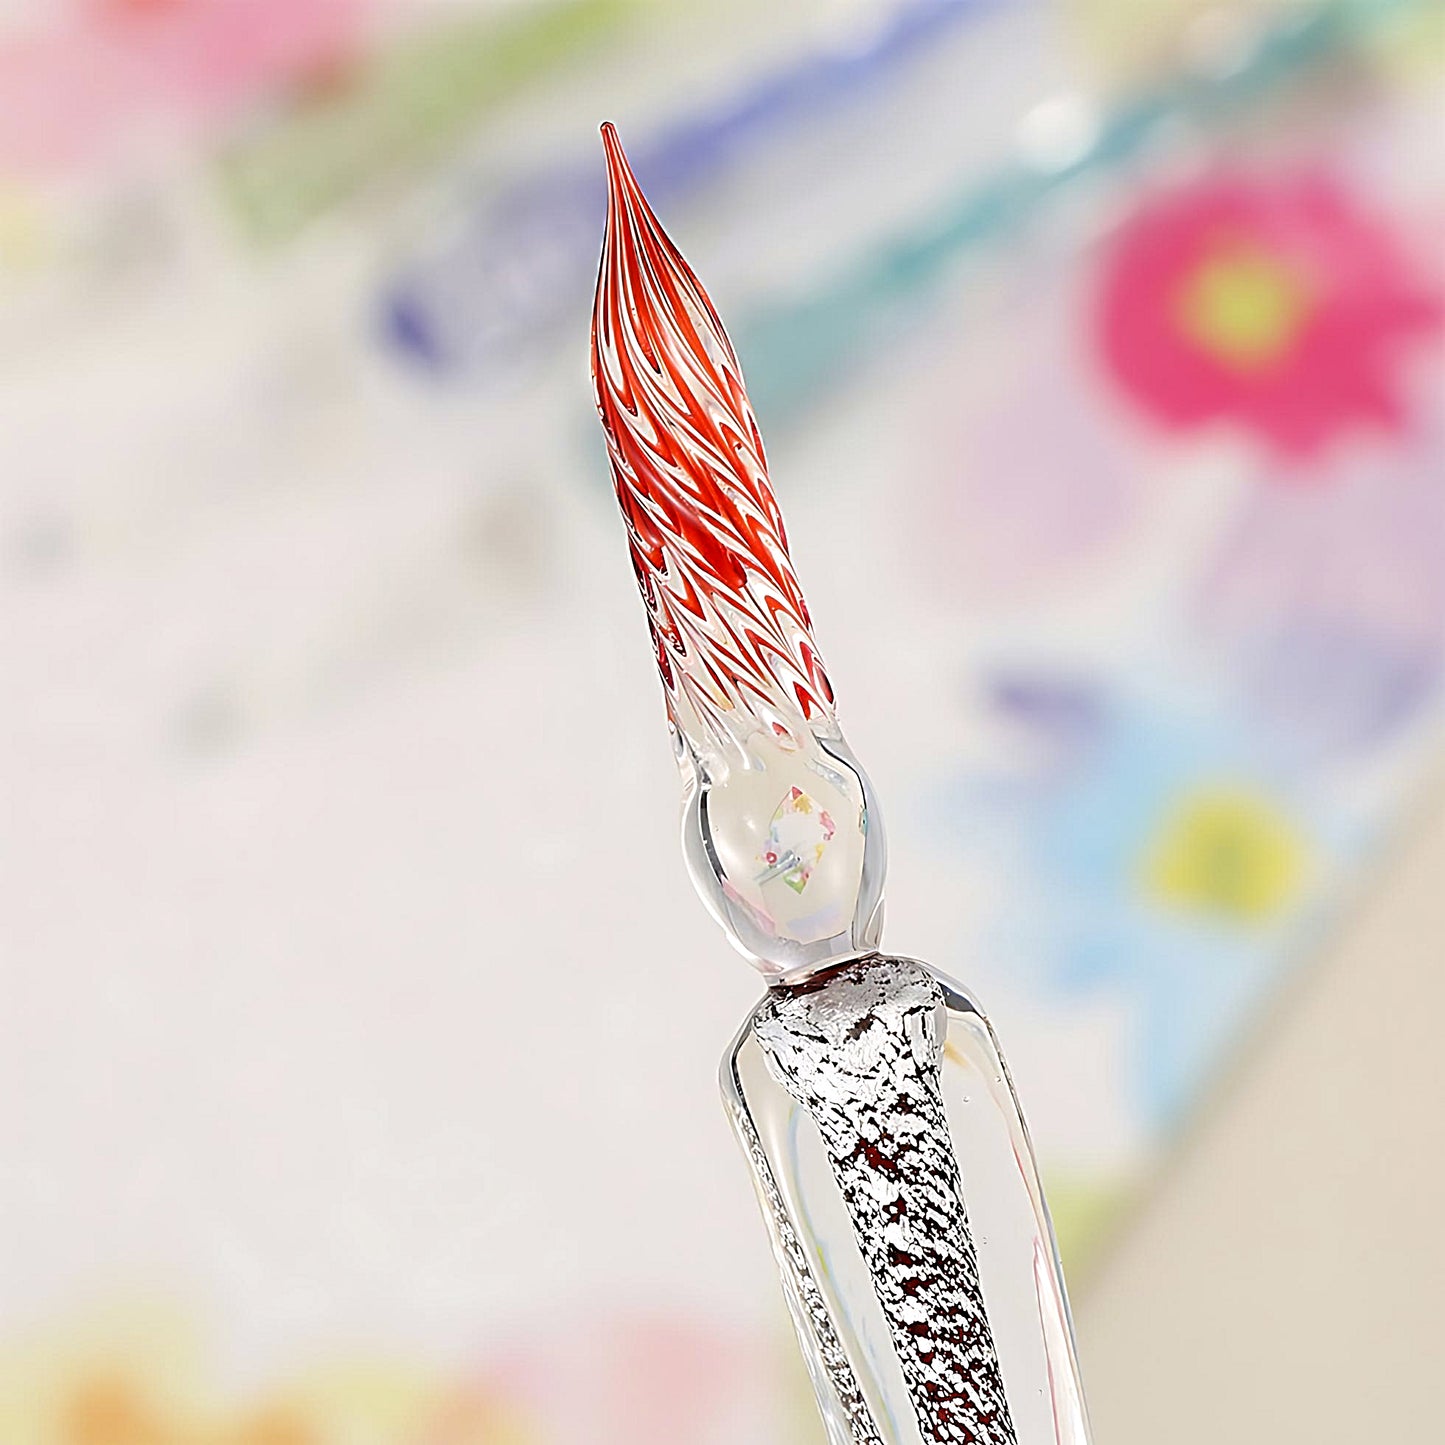 a close-up of a glass dip pen